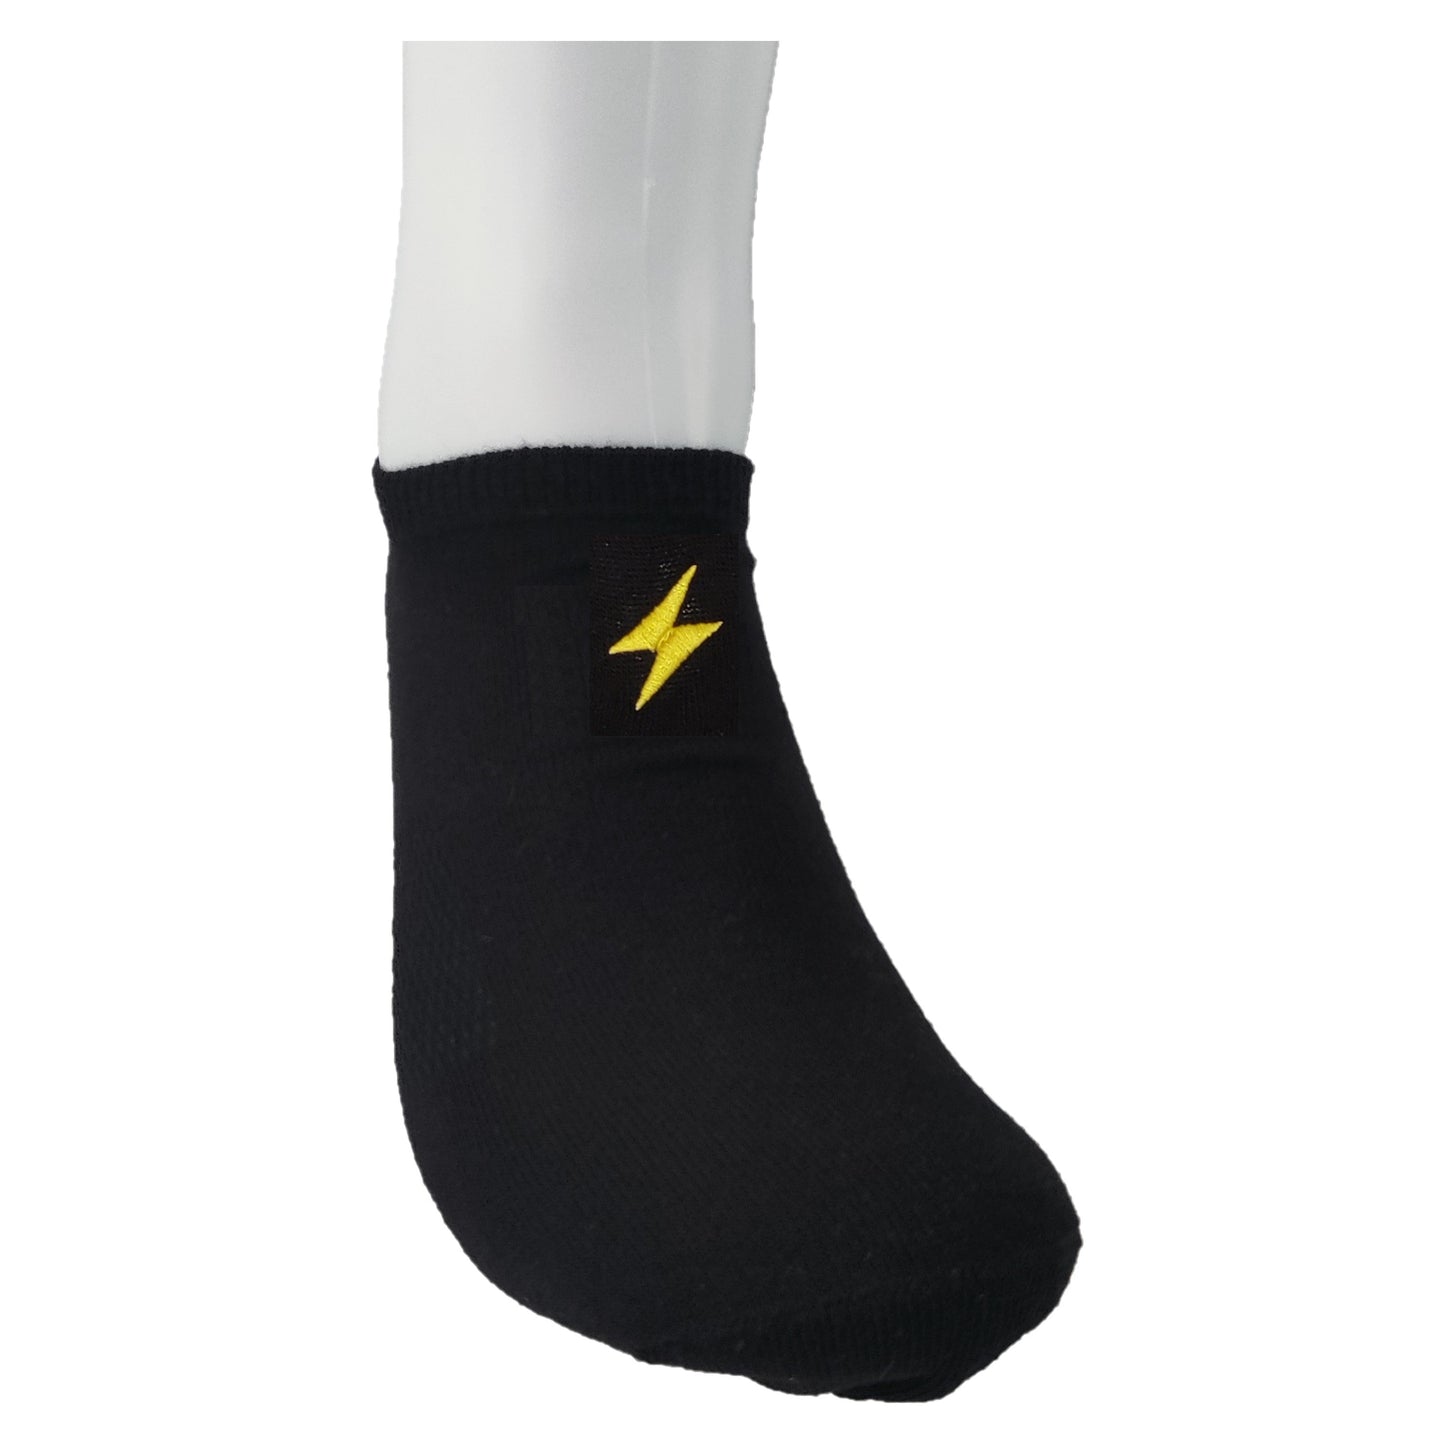 Sneaker-Socken mit Lightning-Logo und Wunschtext